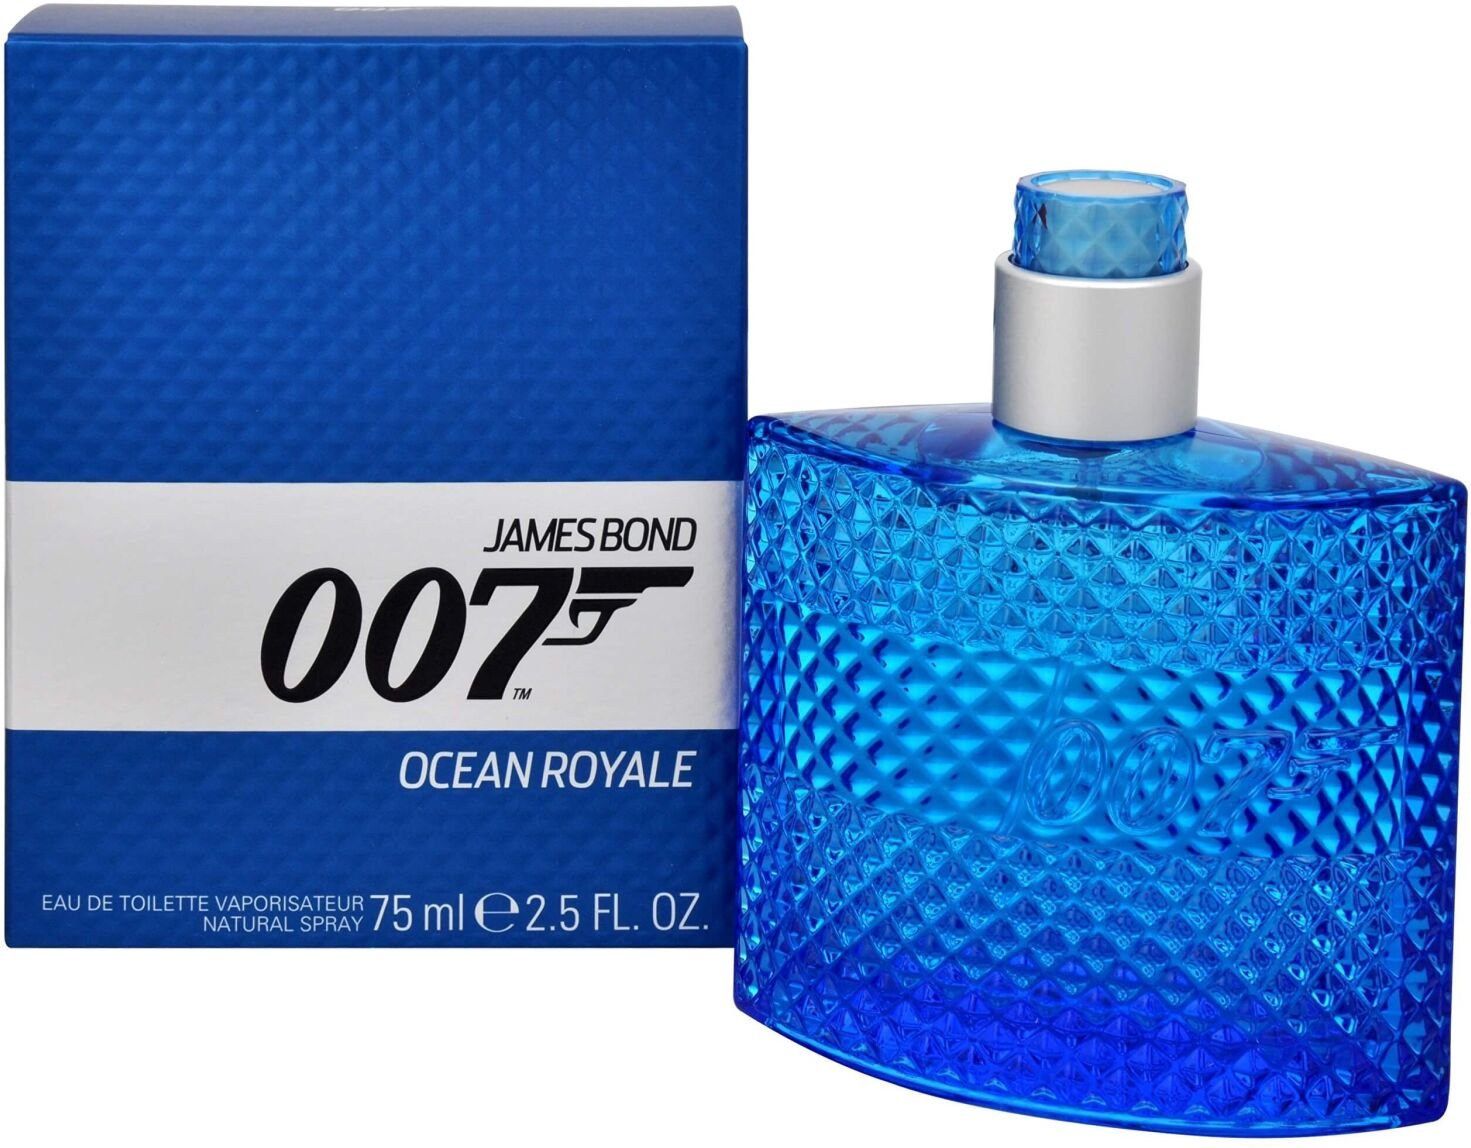 James Bond James Bond 007 Ocean Royale - EDT 30 ml